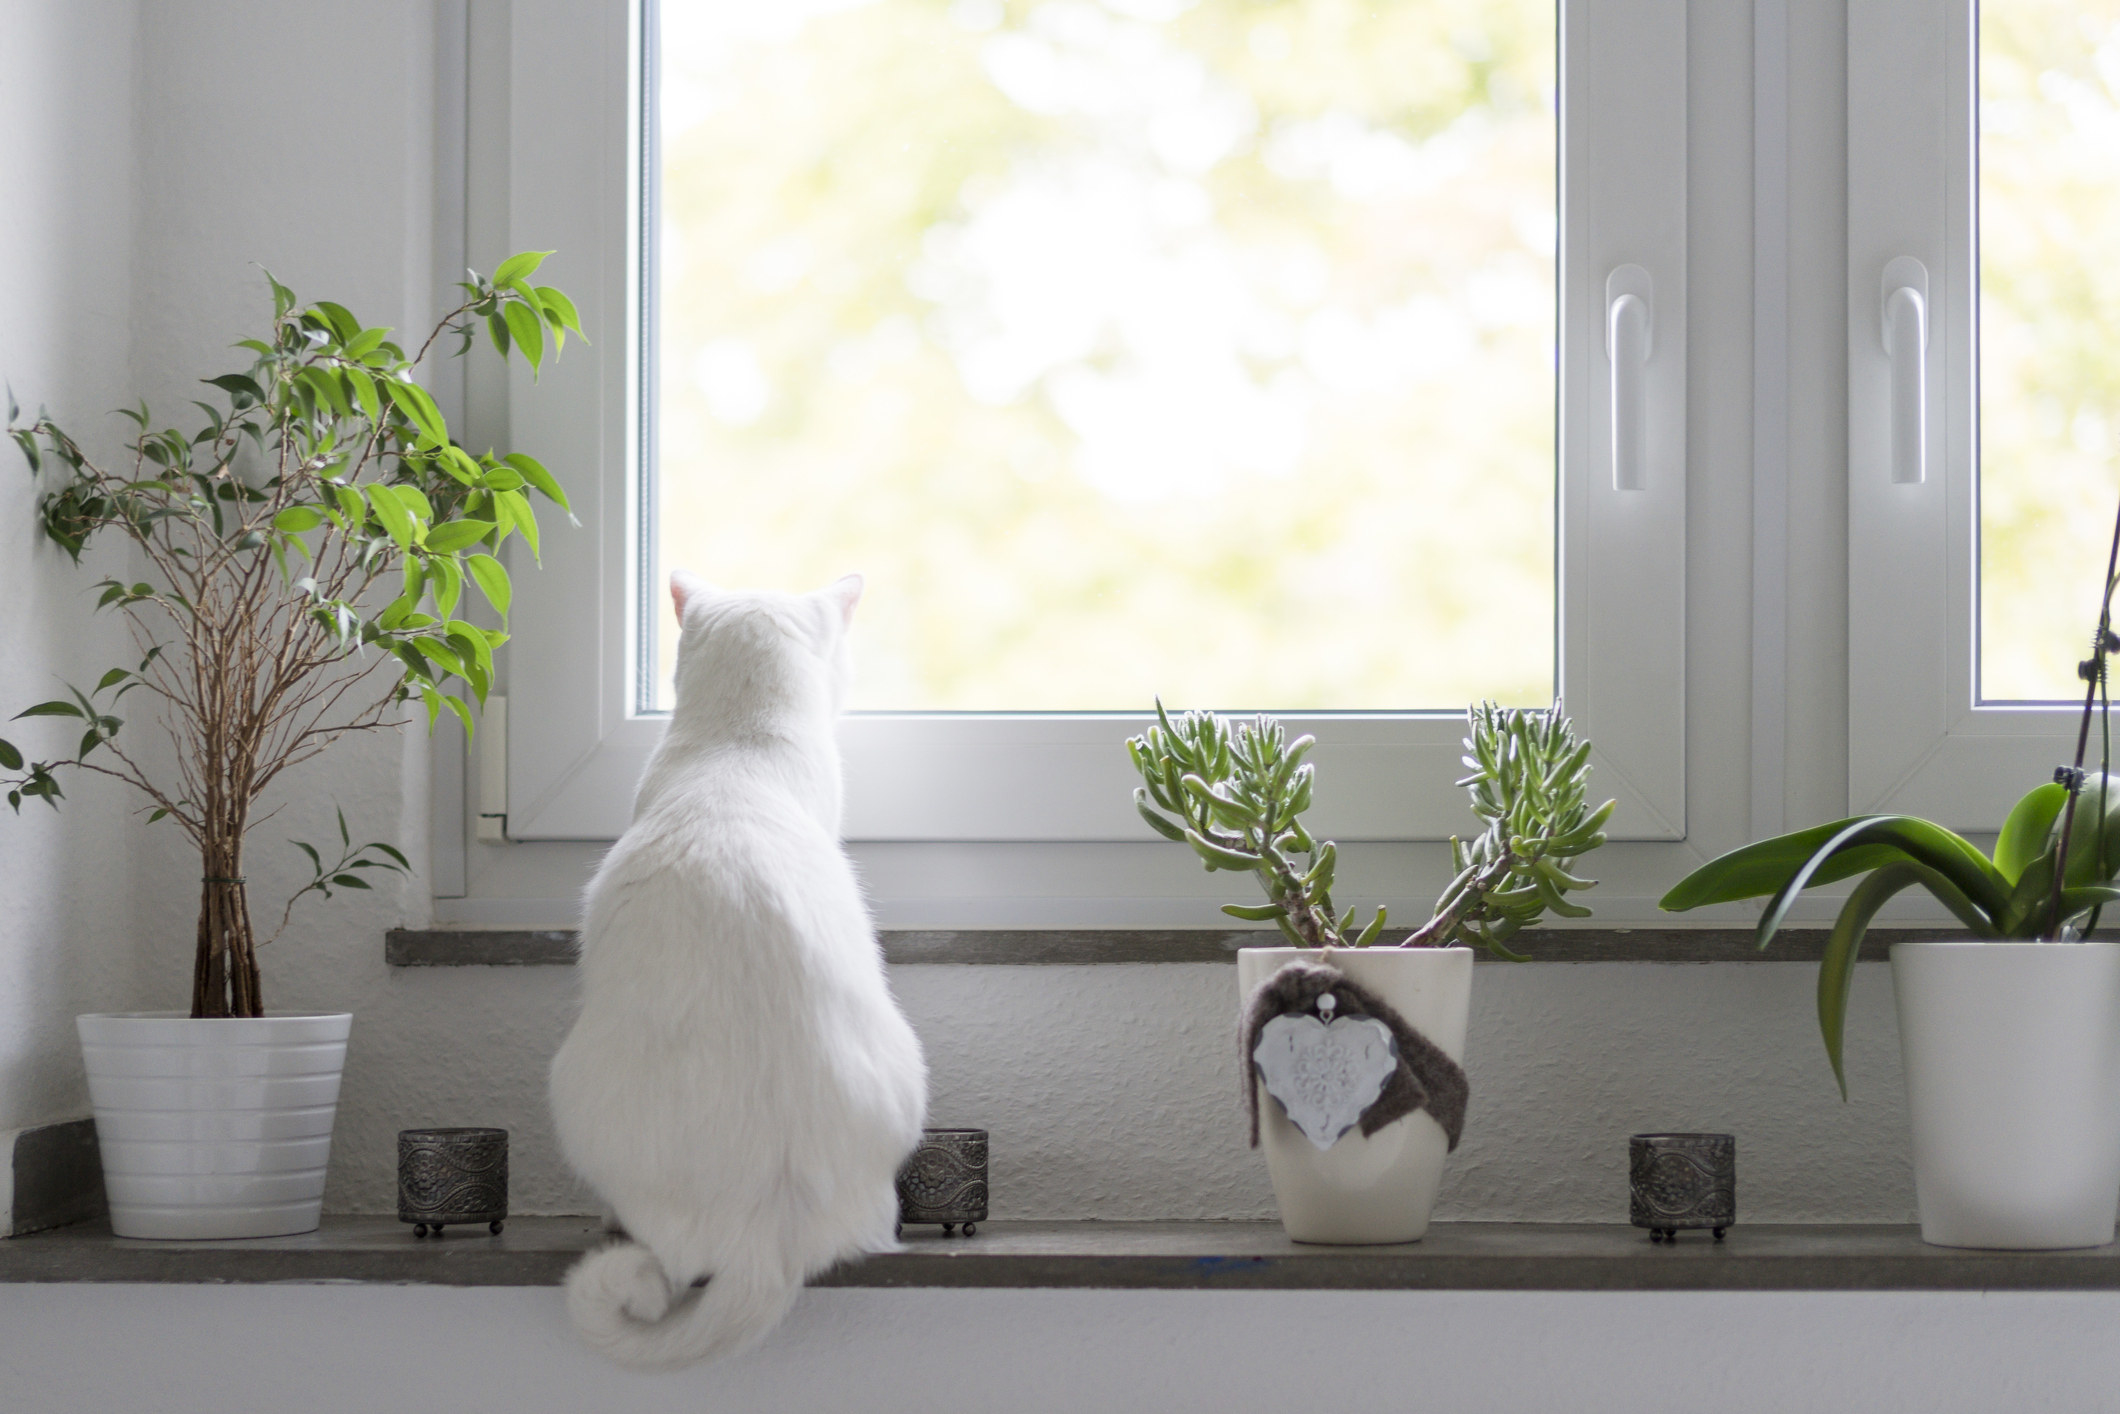 A cat sitting on a window sill.